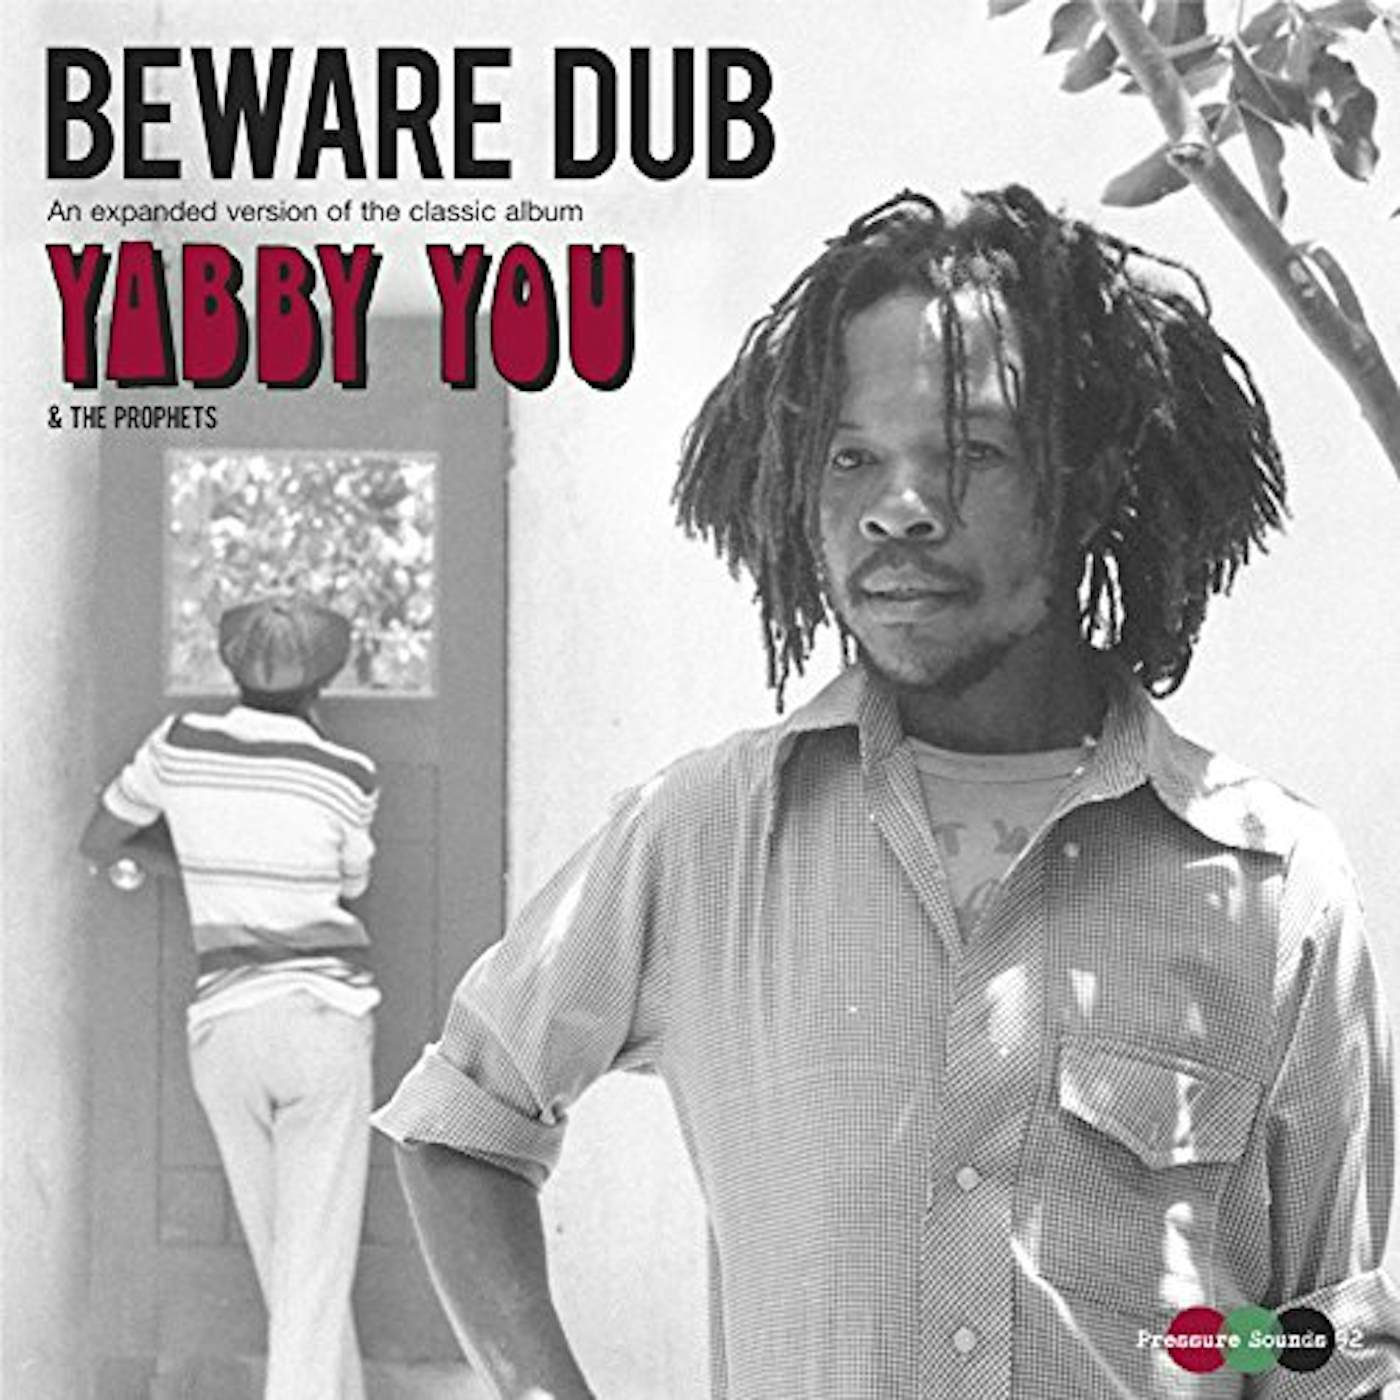 Yabby You Beware Dub Vinyl Record